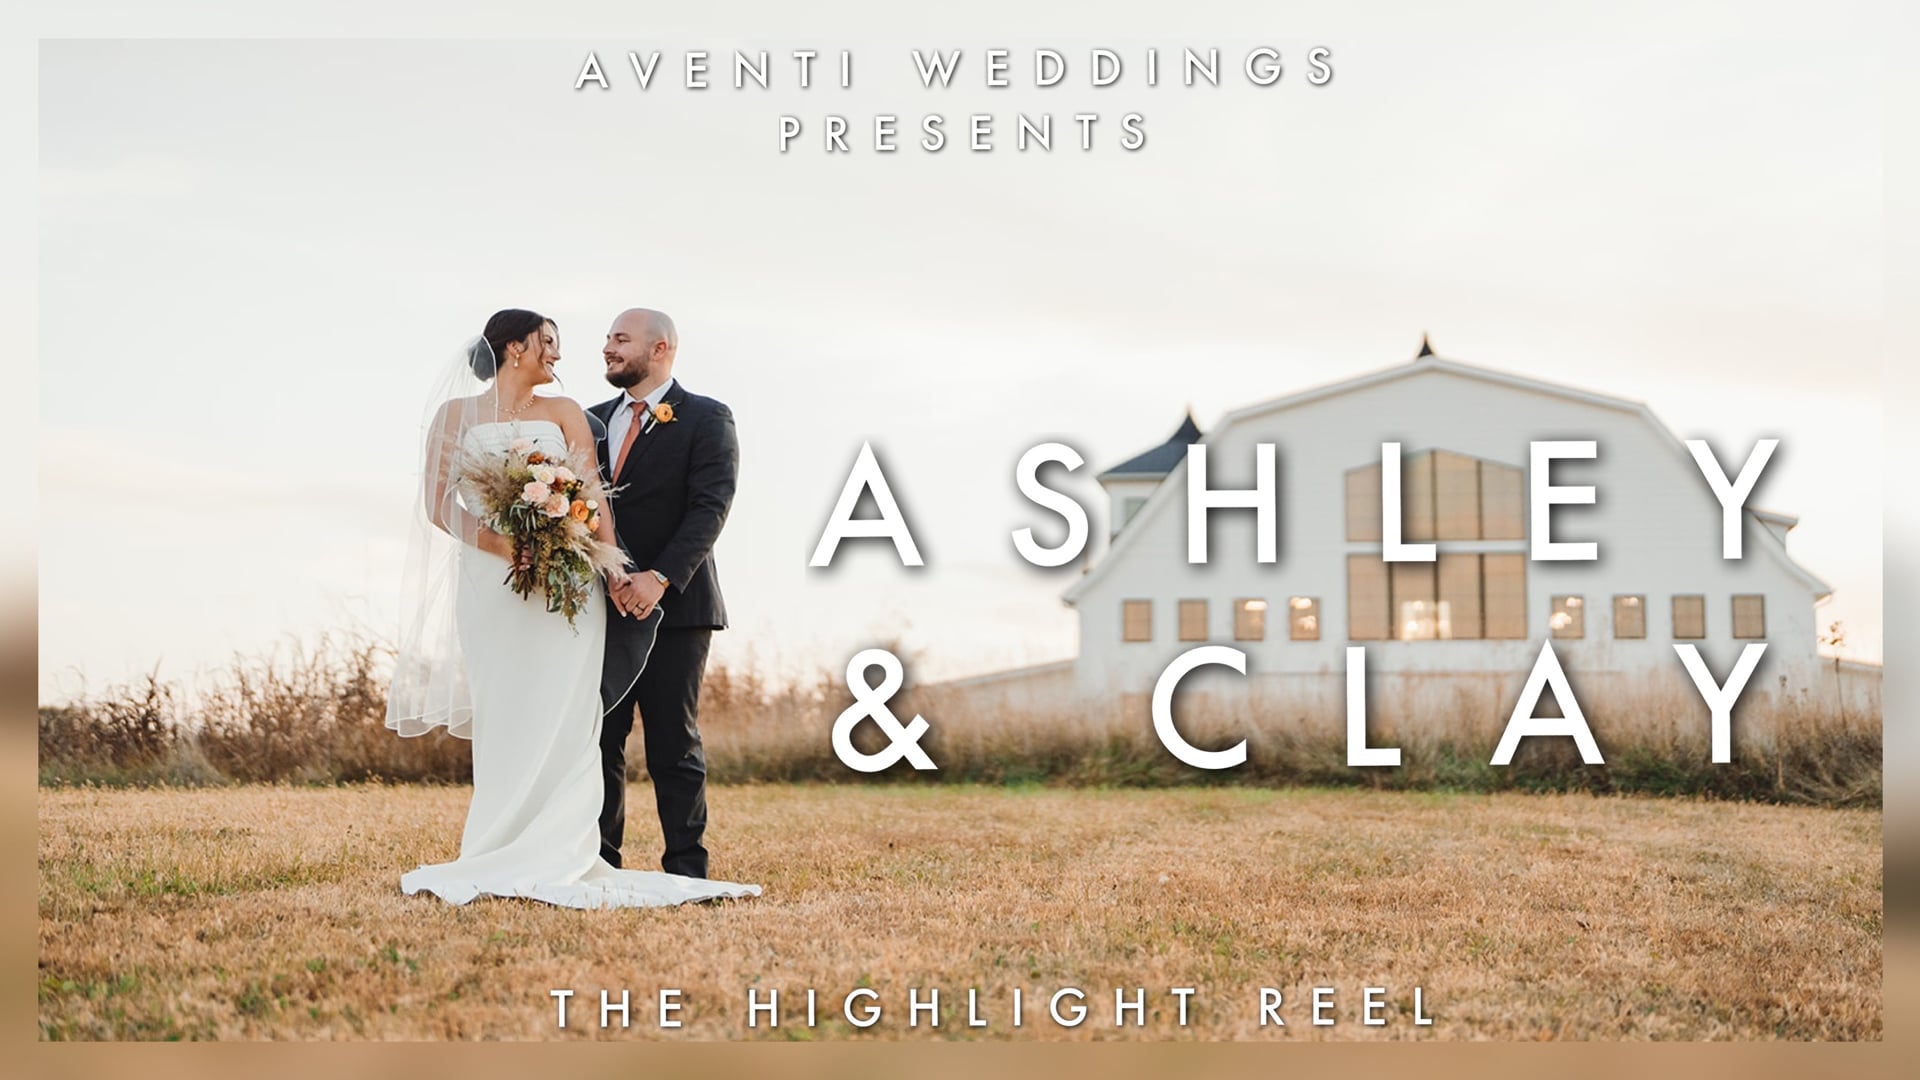 Ashley + Clay - The Highlight Reel